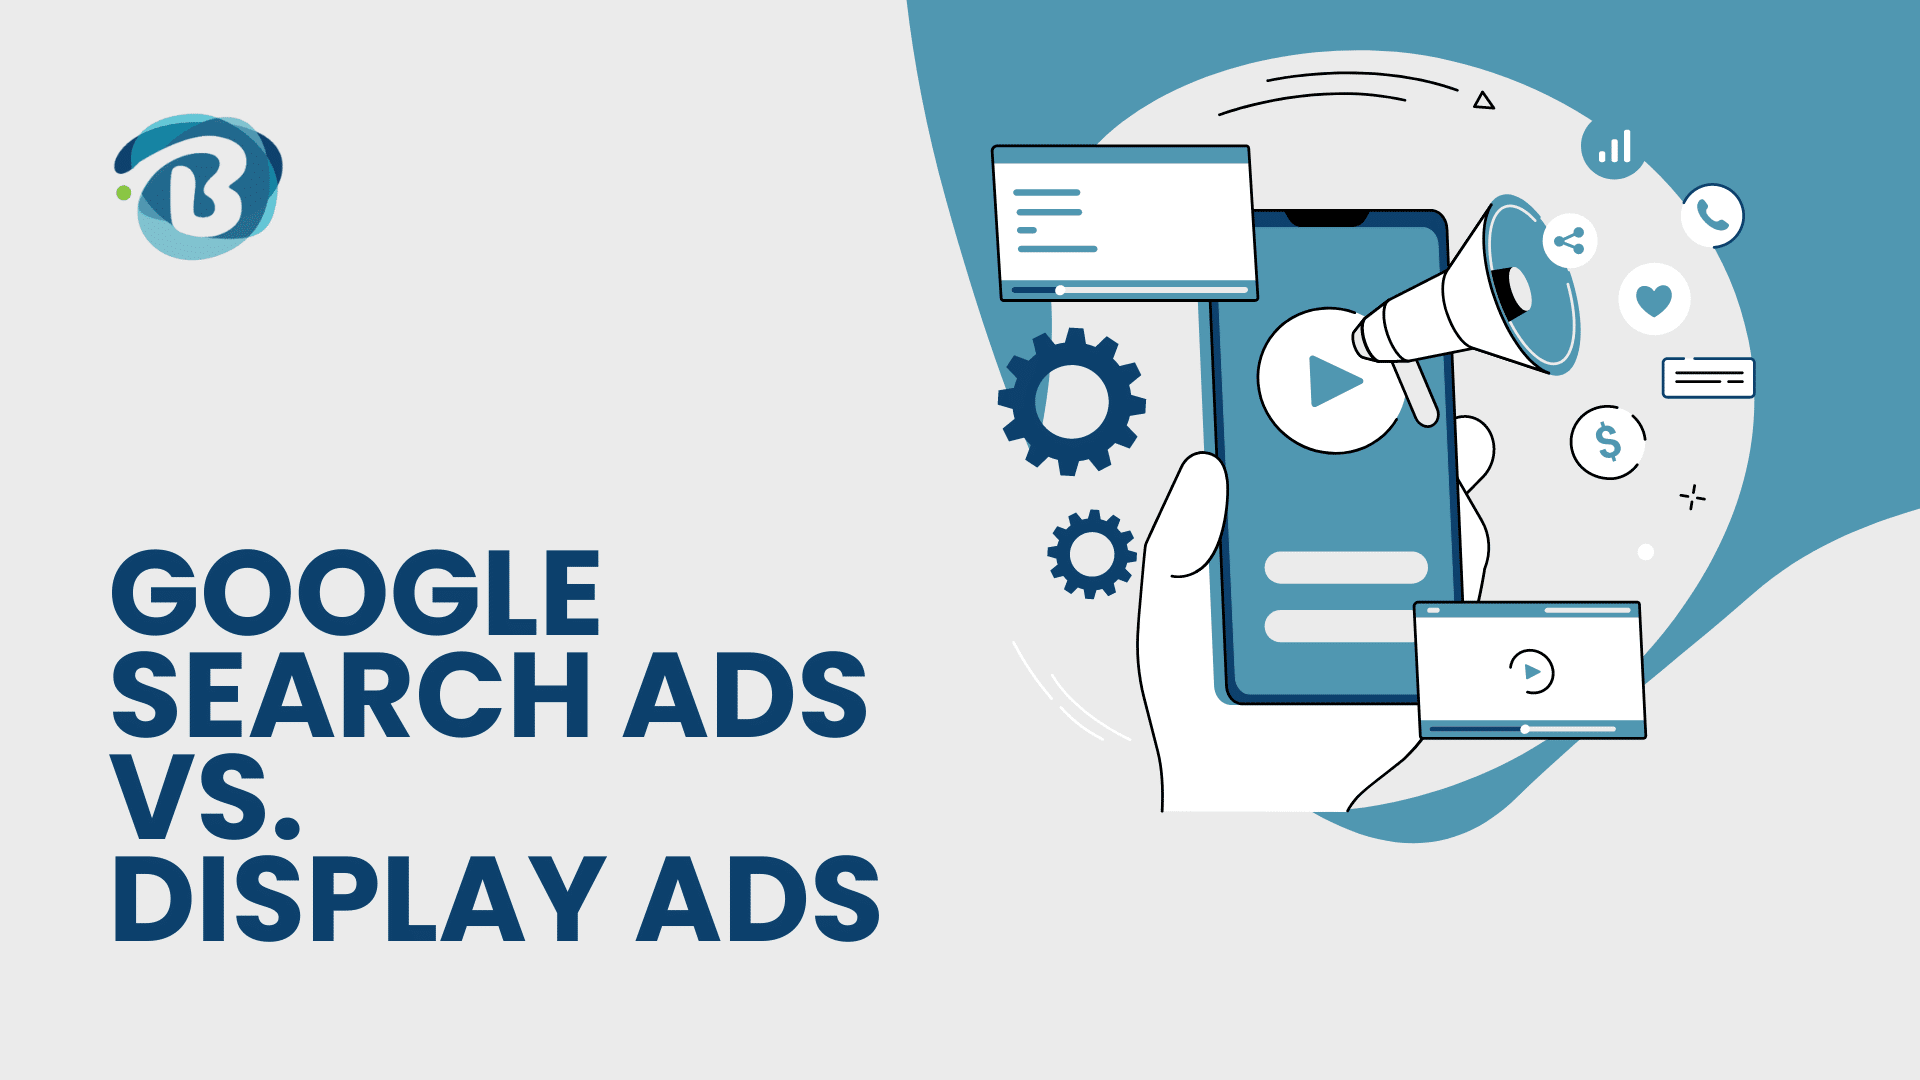 Google search ads vs display ads